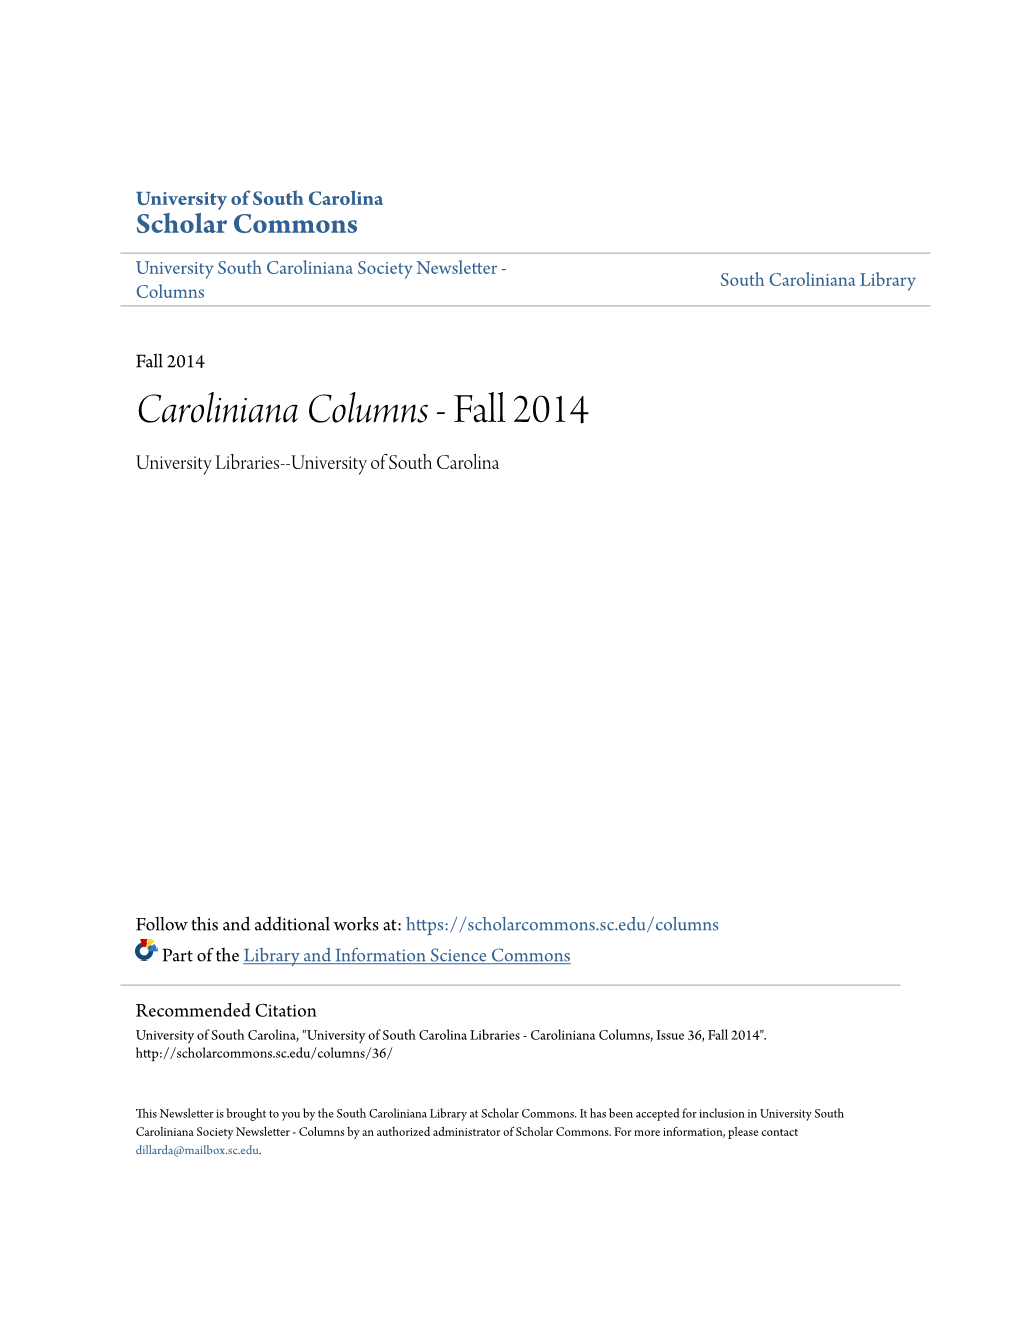 Caroliniana Columns - Fall 2014 University Libraries--University of South Carolina